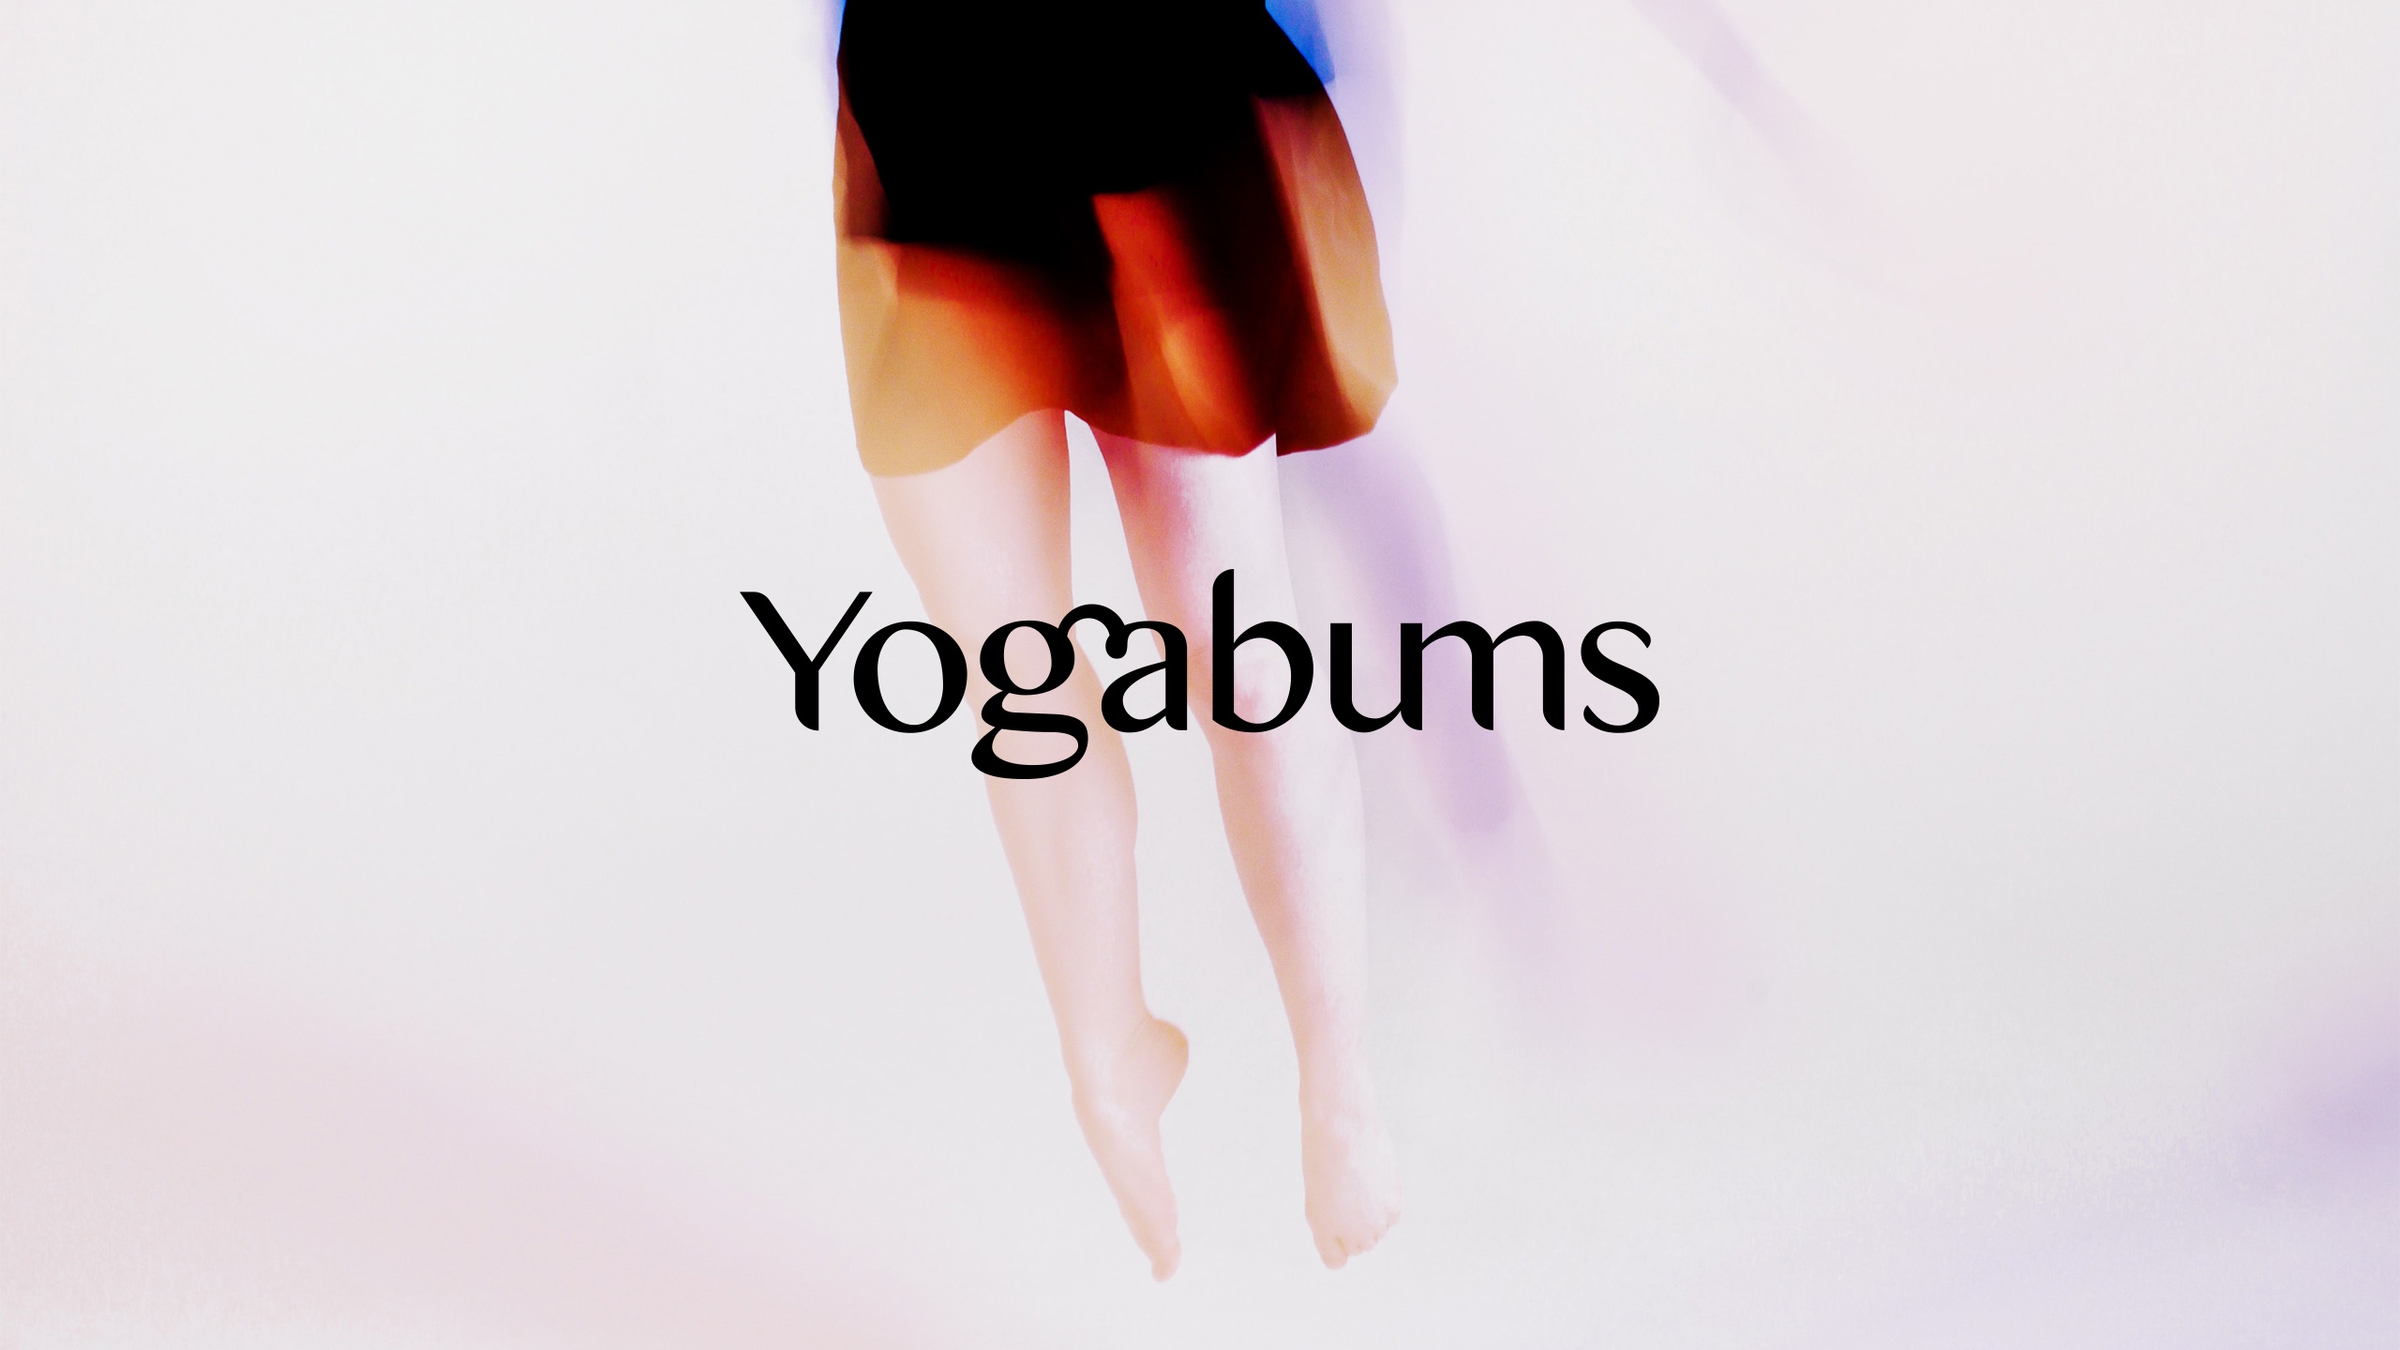 Yogabums